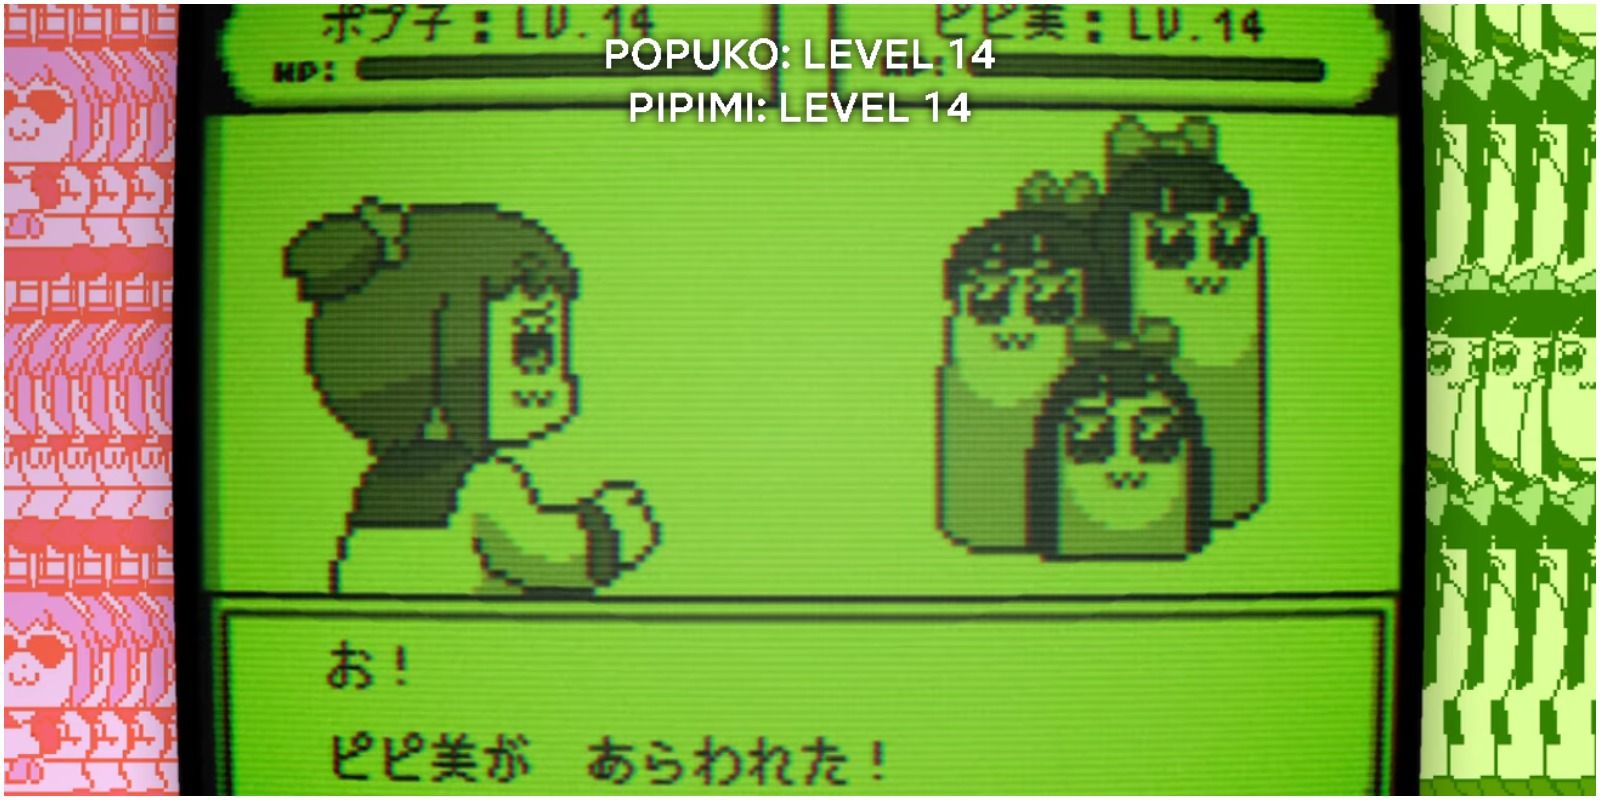 Pipimi and Popuko Fighting Pokemon Style